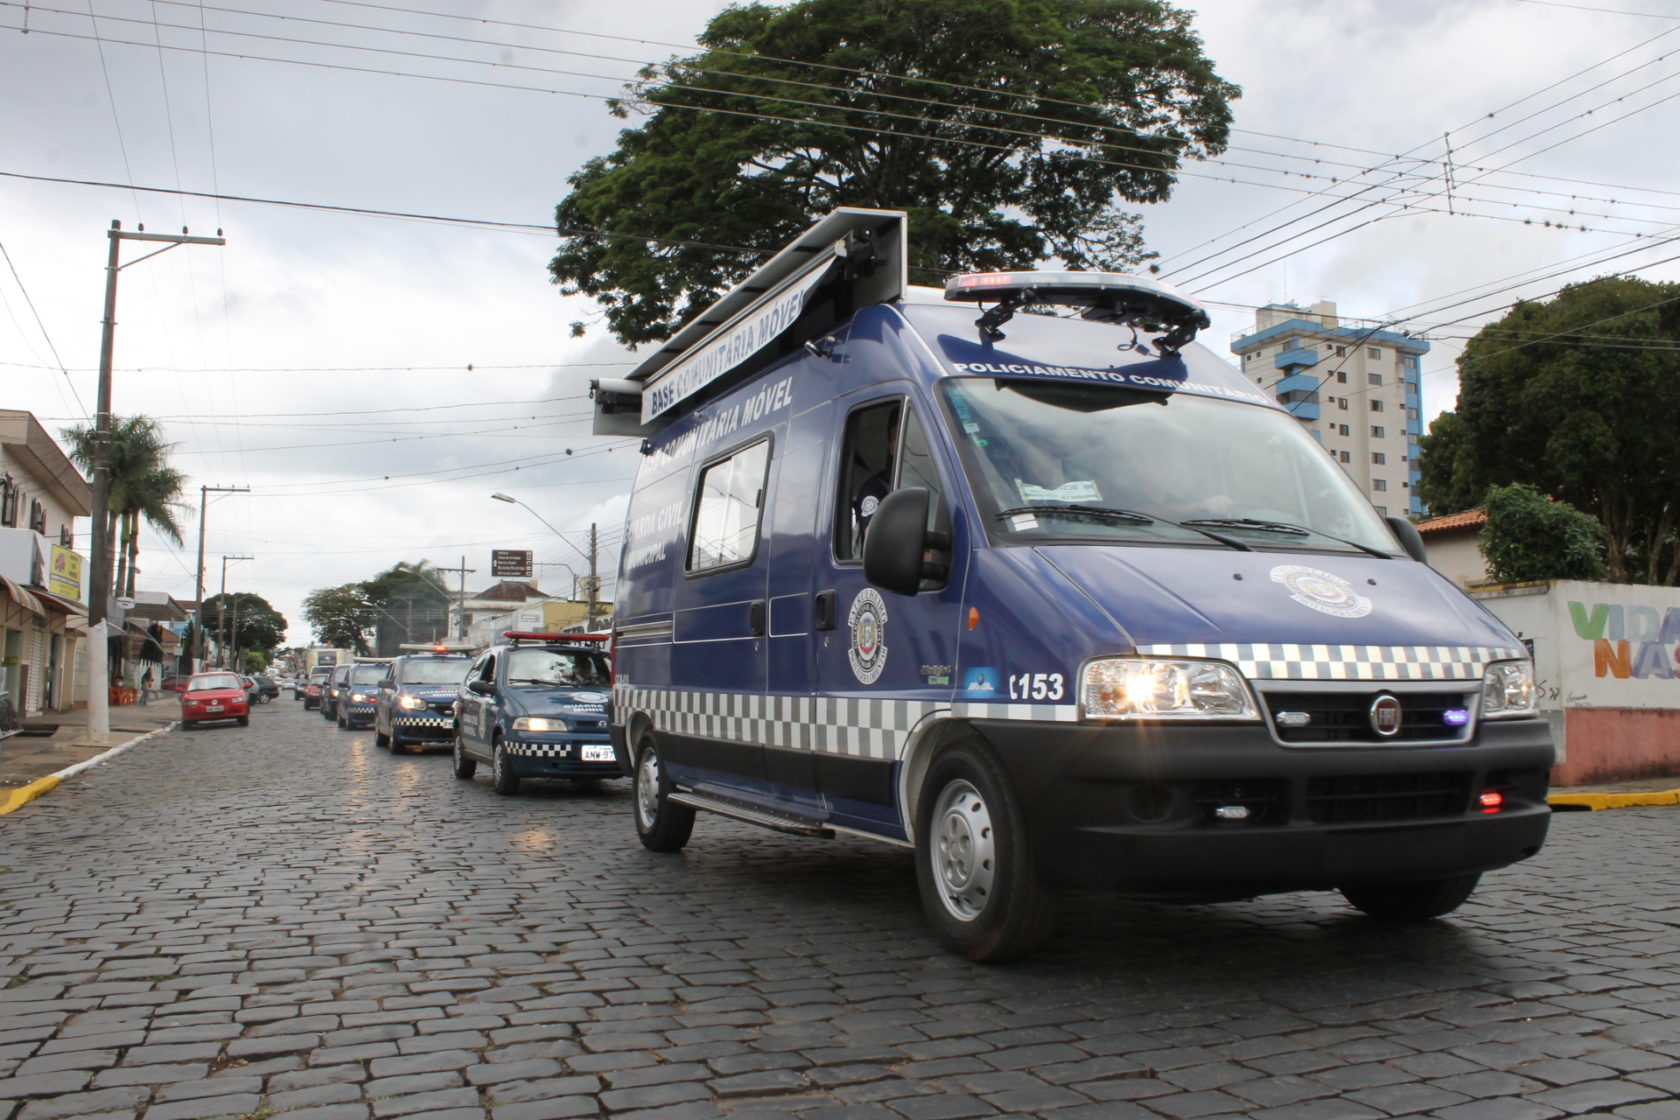 Prefeito recebe base móvel para Guarda Civil Municipal